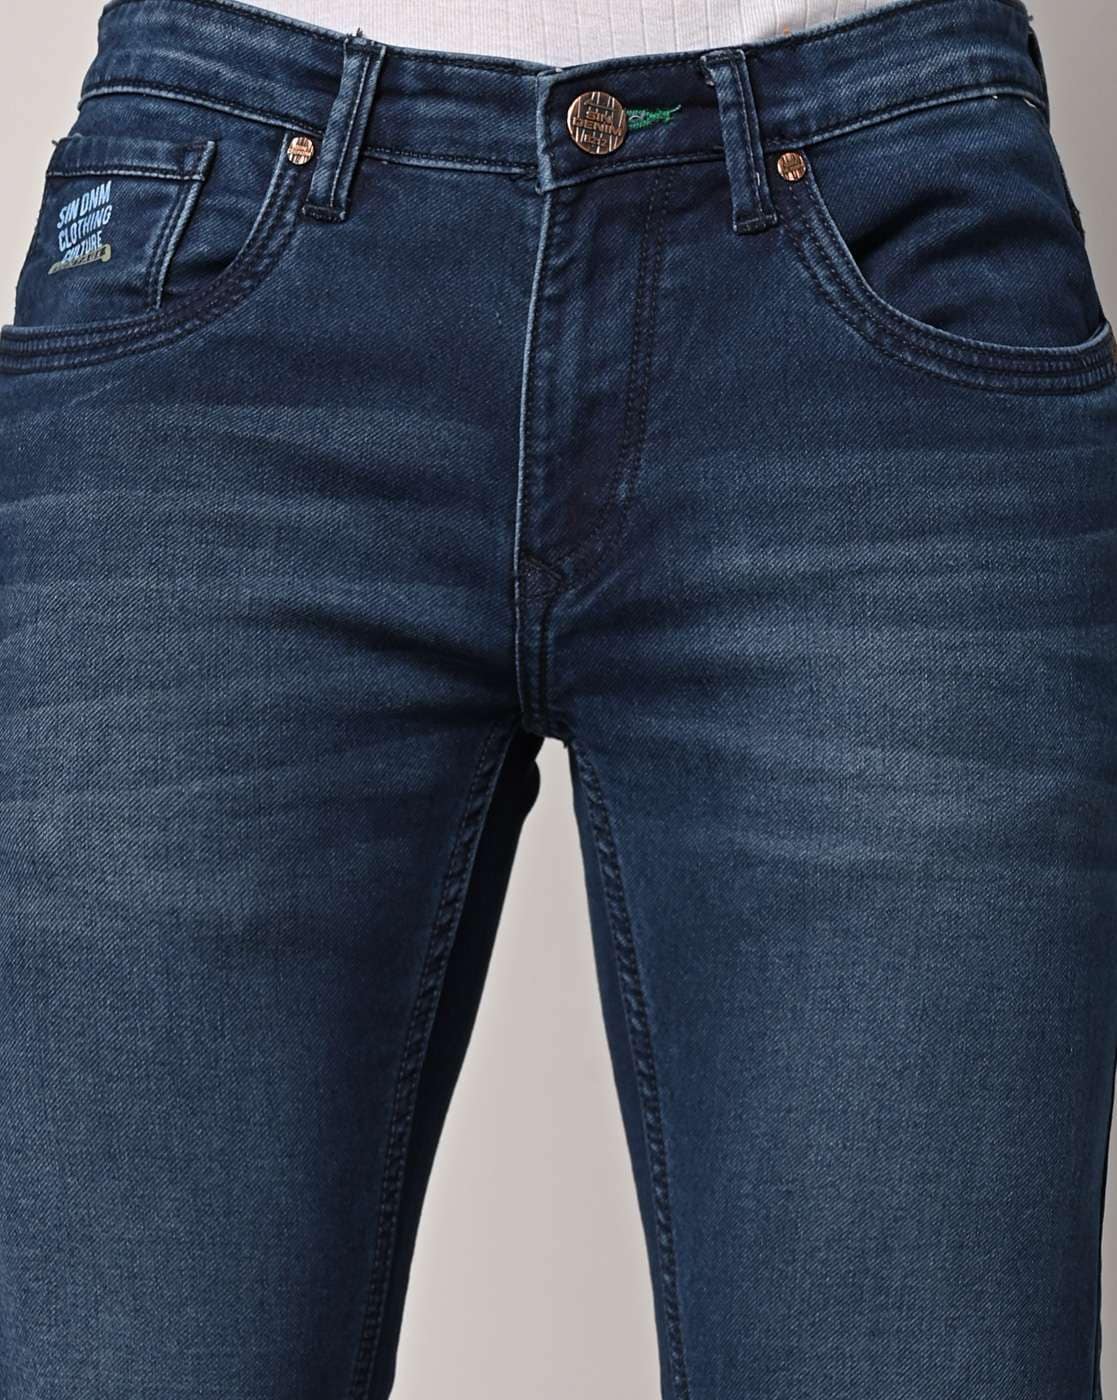 Buy by Men for Indigo Online Jeans SIN